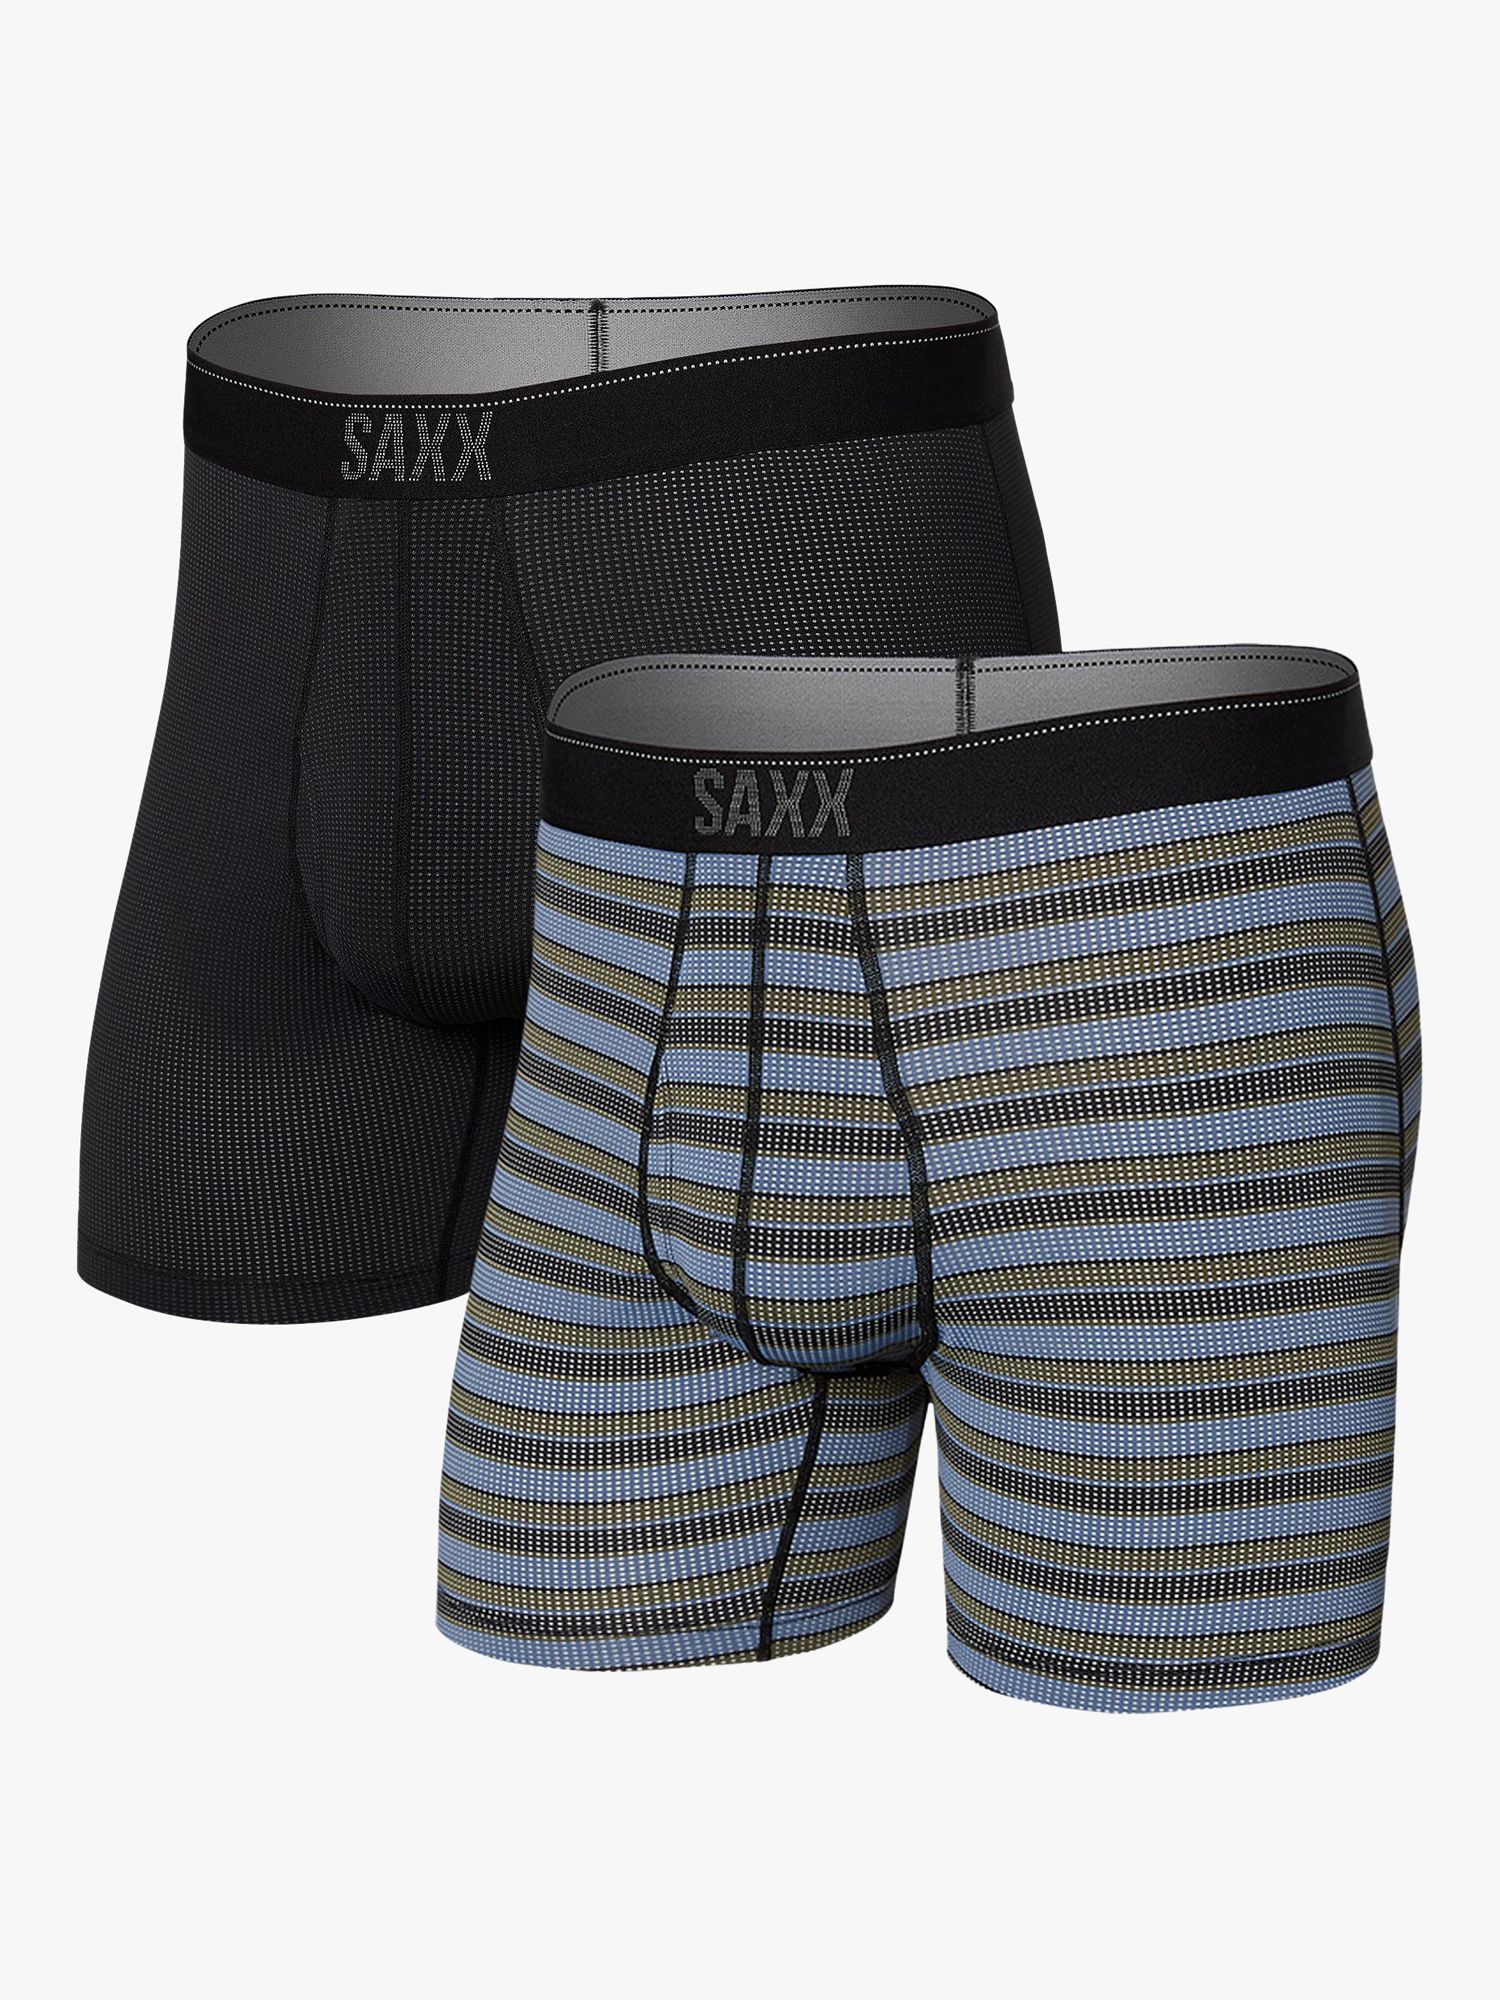 SAXX Quest Slim Fit Plain & Stripe Trunks, Pack of 2, Black/Grey Multi ...